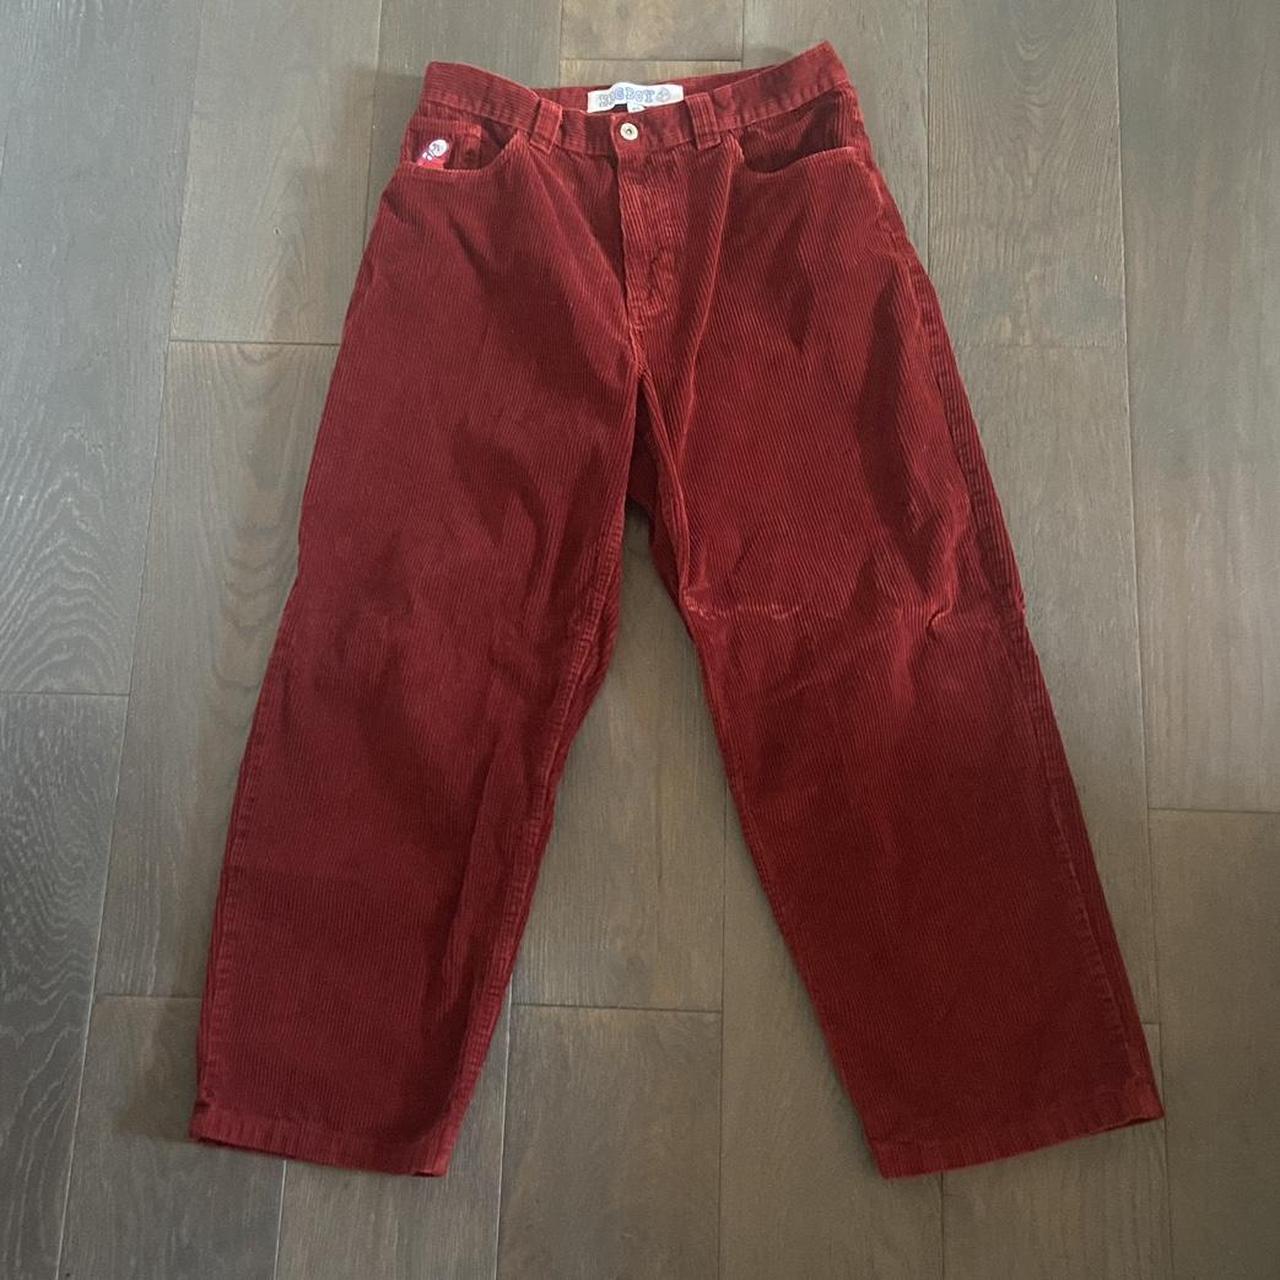 Crewcuts Bowery Corduroy Pants, Red Boys Size 16